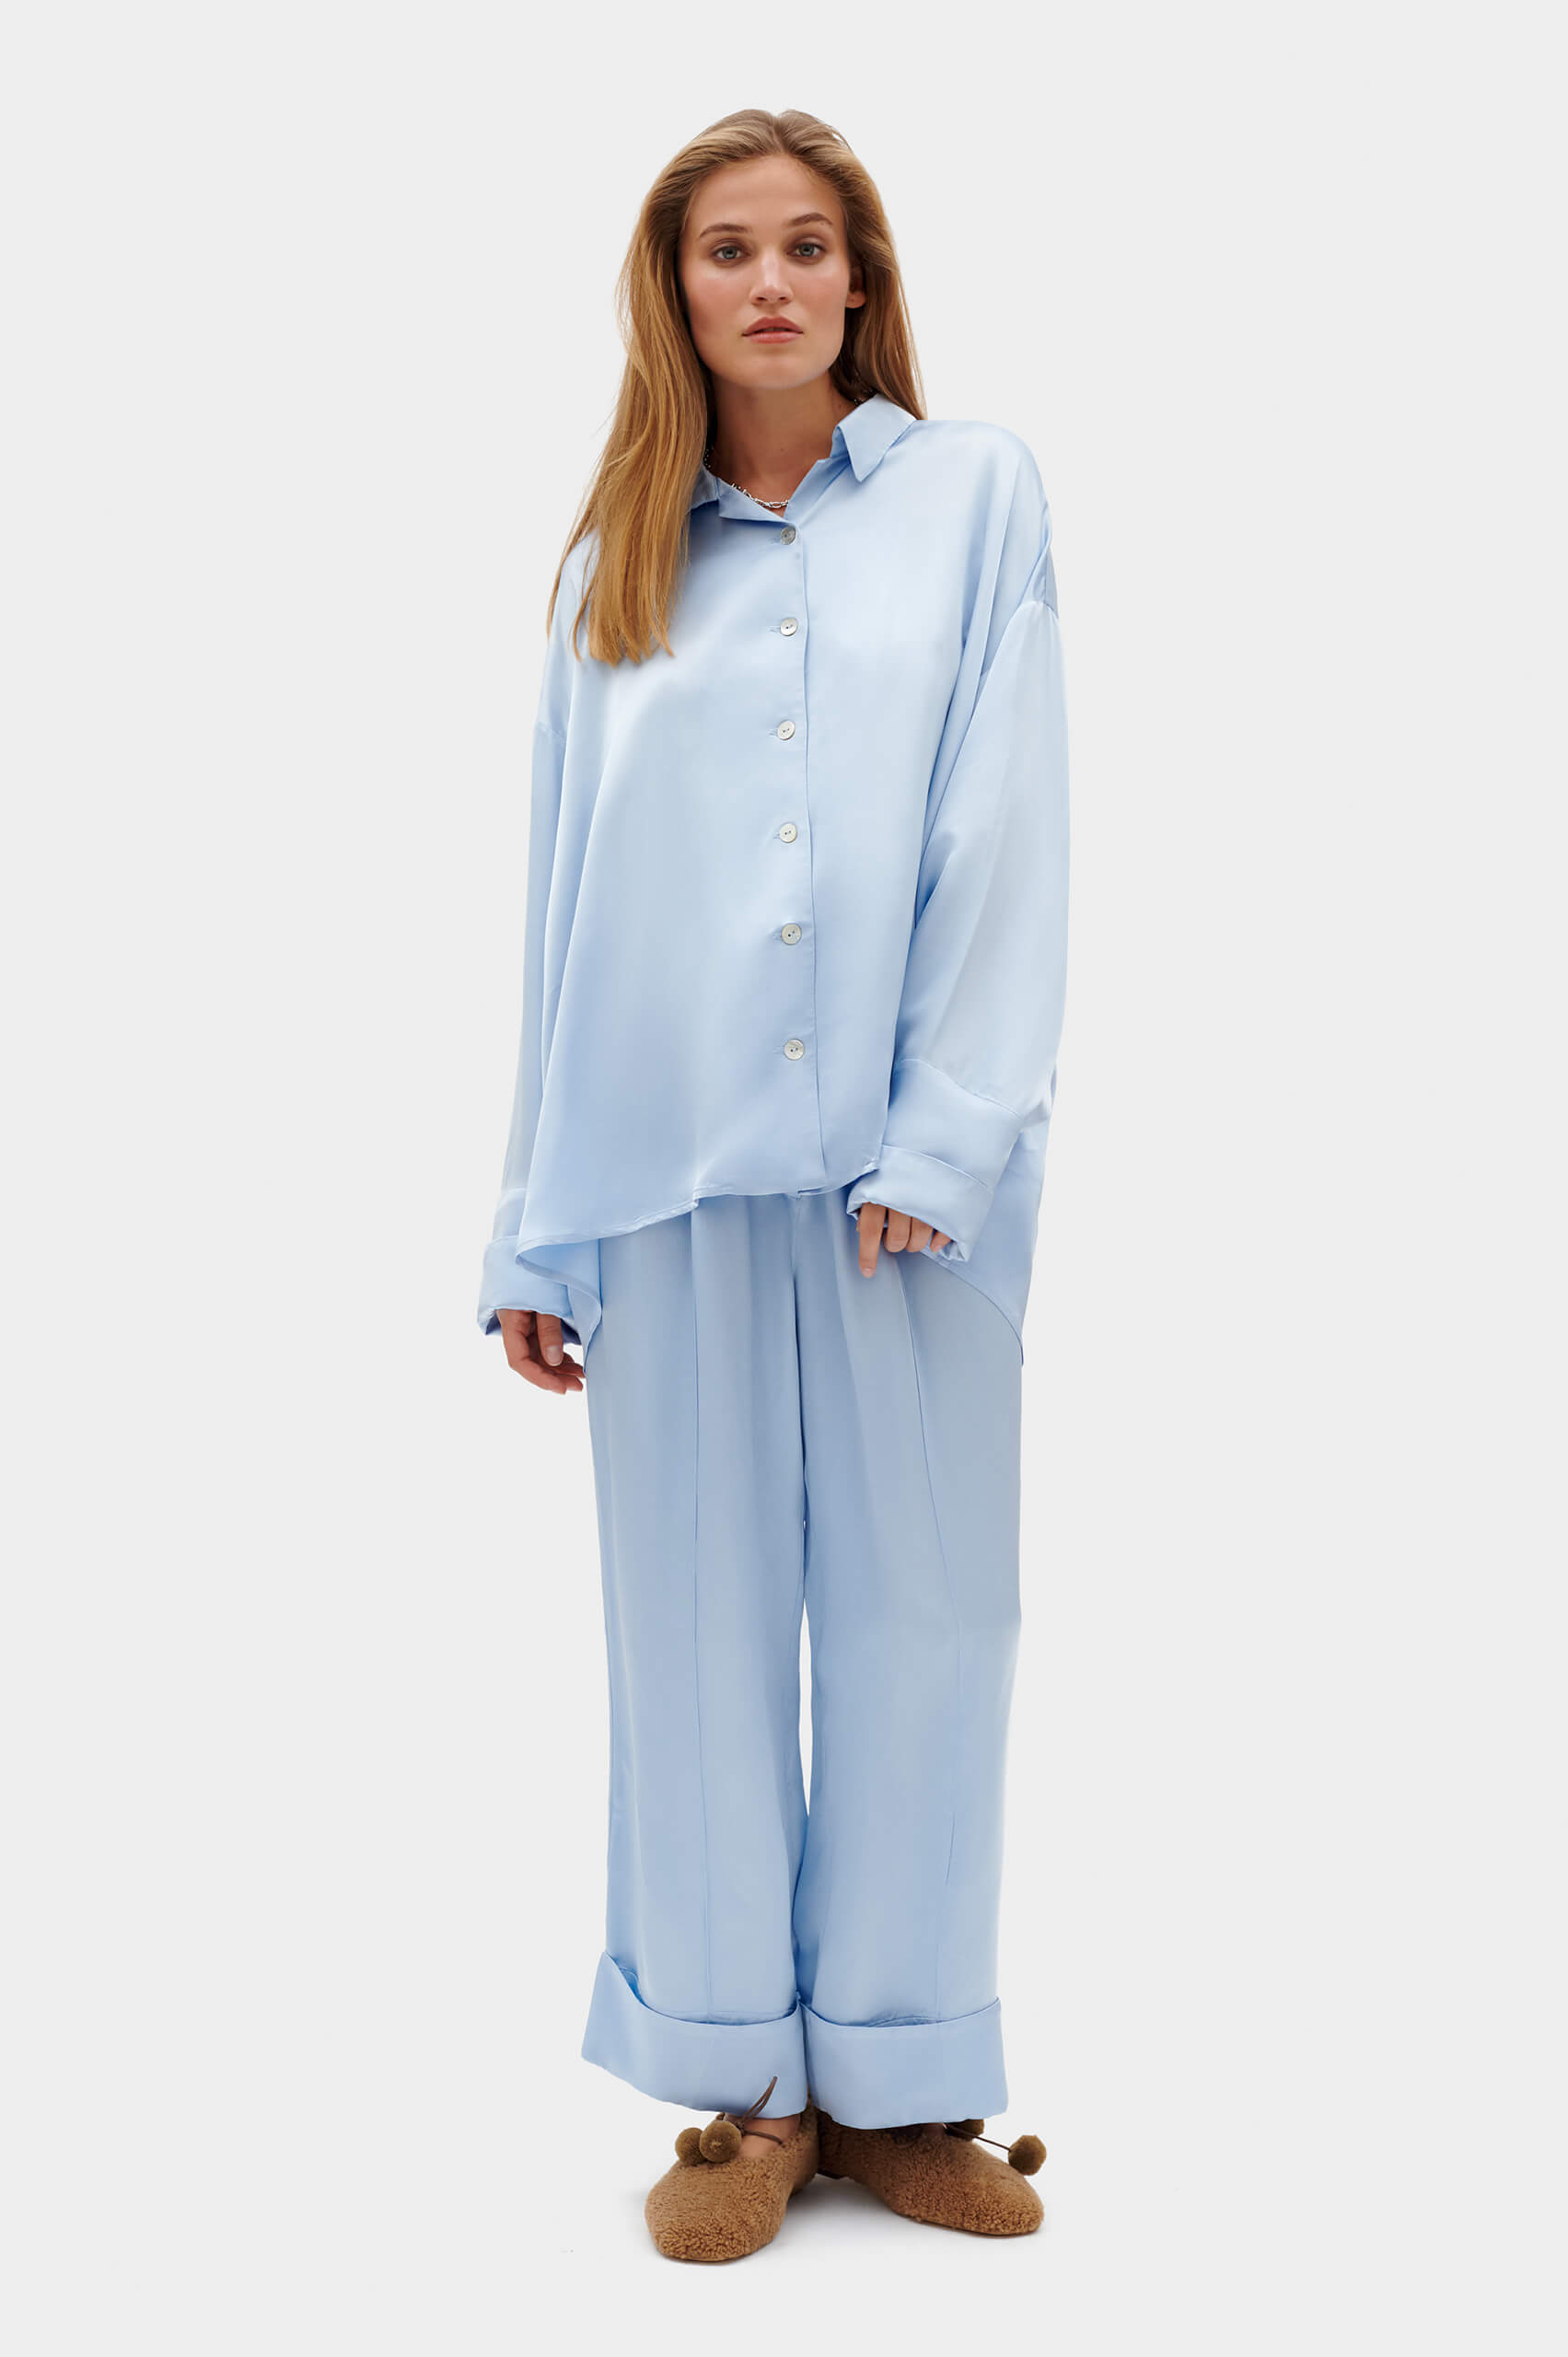 Sizeless blue pajamas | Women's PJ set by Sleeper